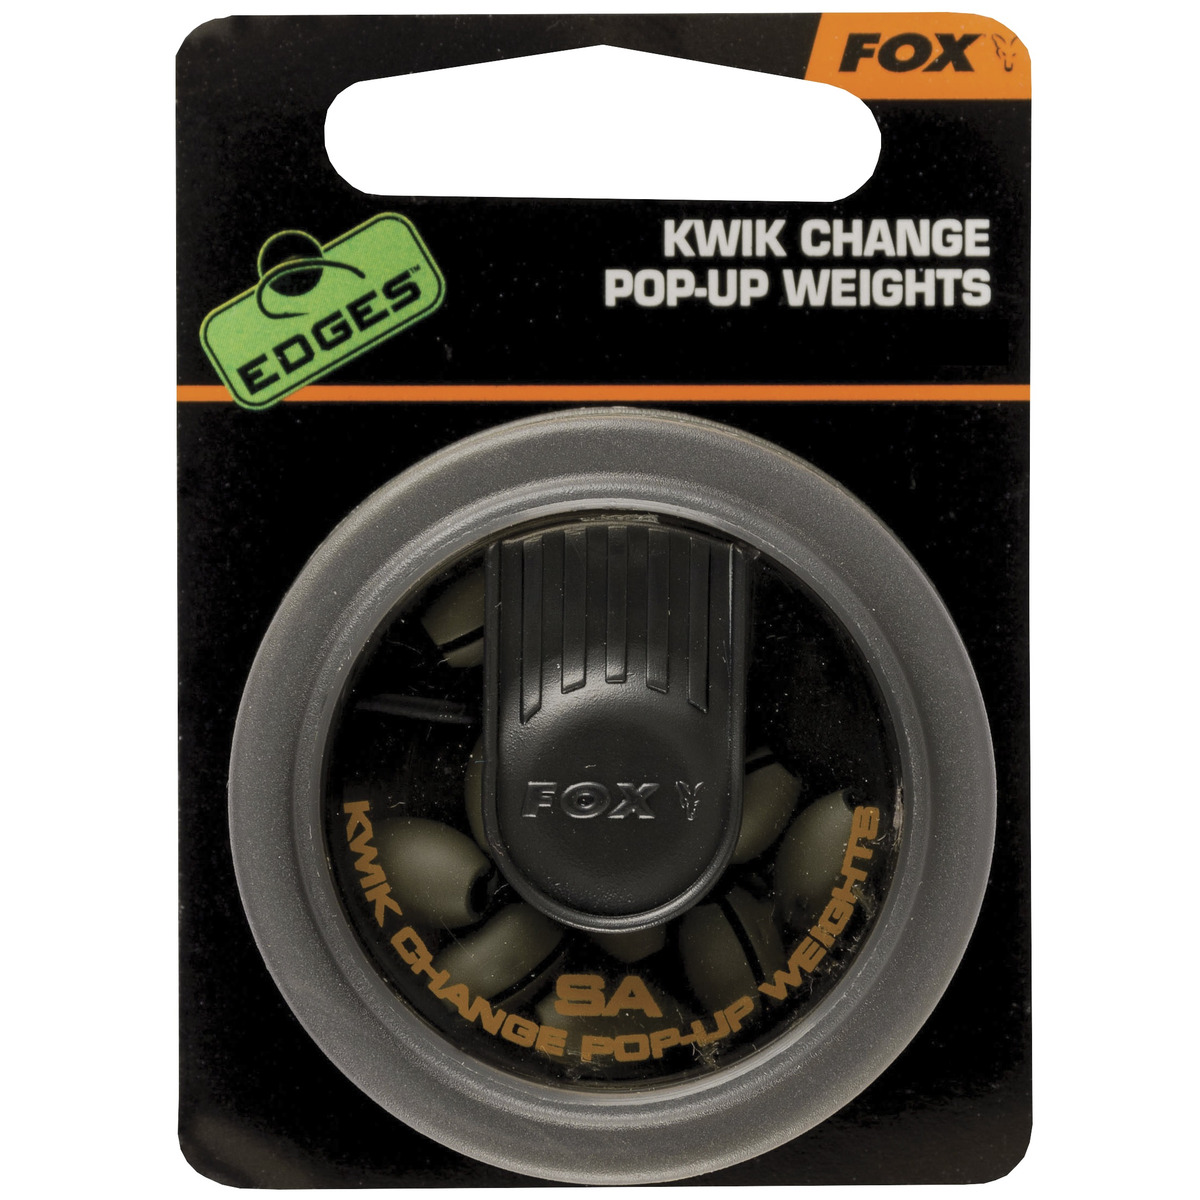 Fox Kwik Change Pop-up Weights - No.4